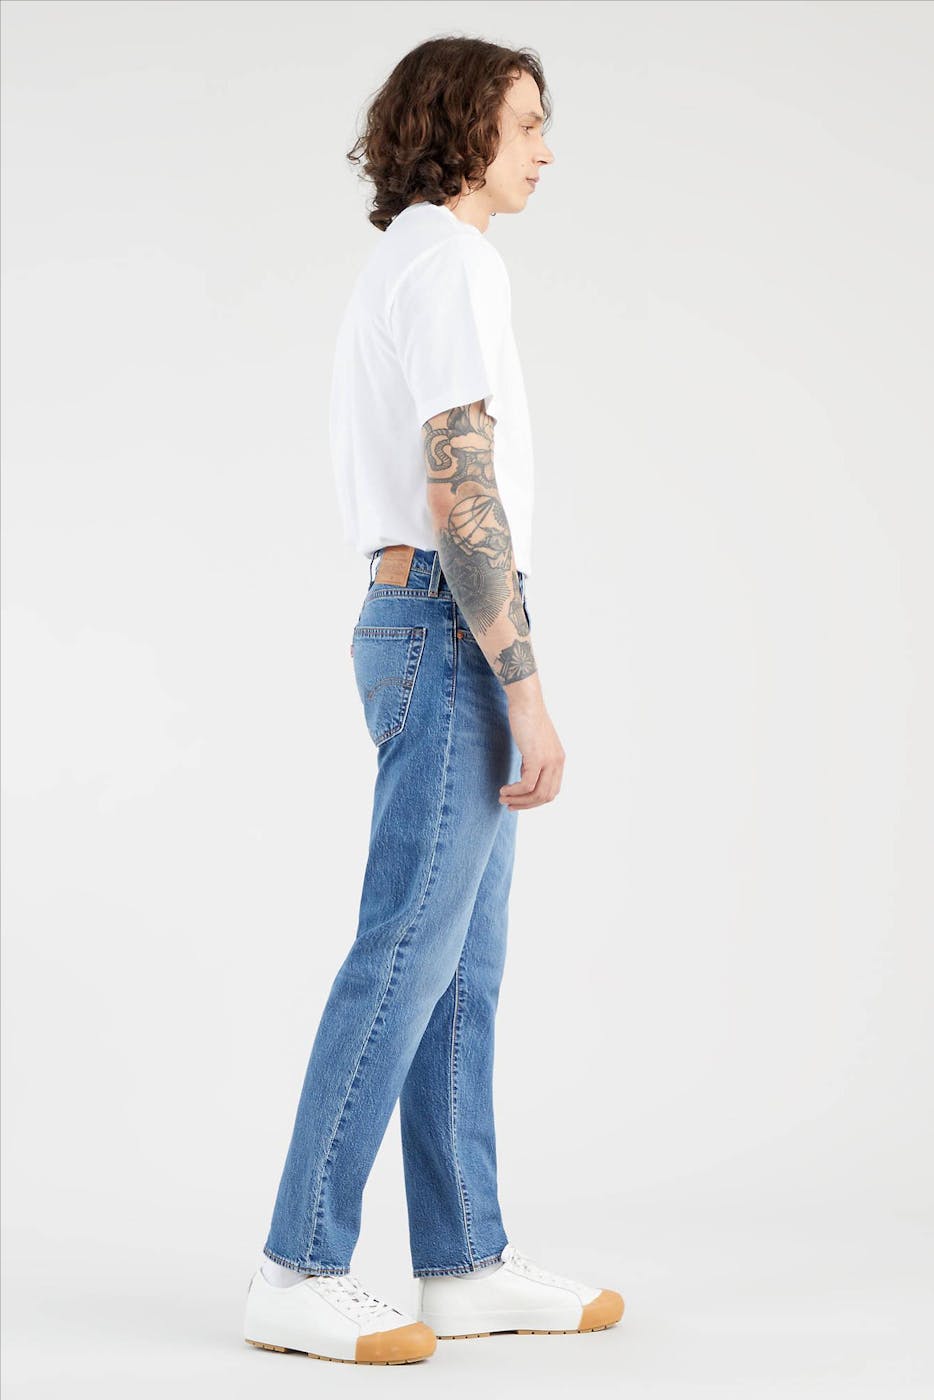 Levi's - Blauwe 502 Taper jeans